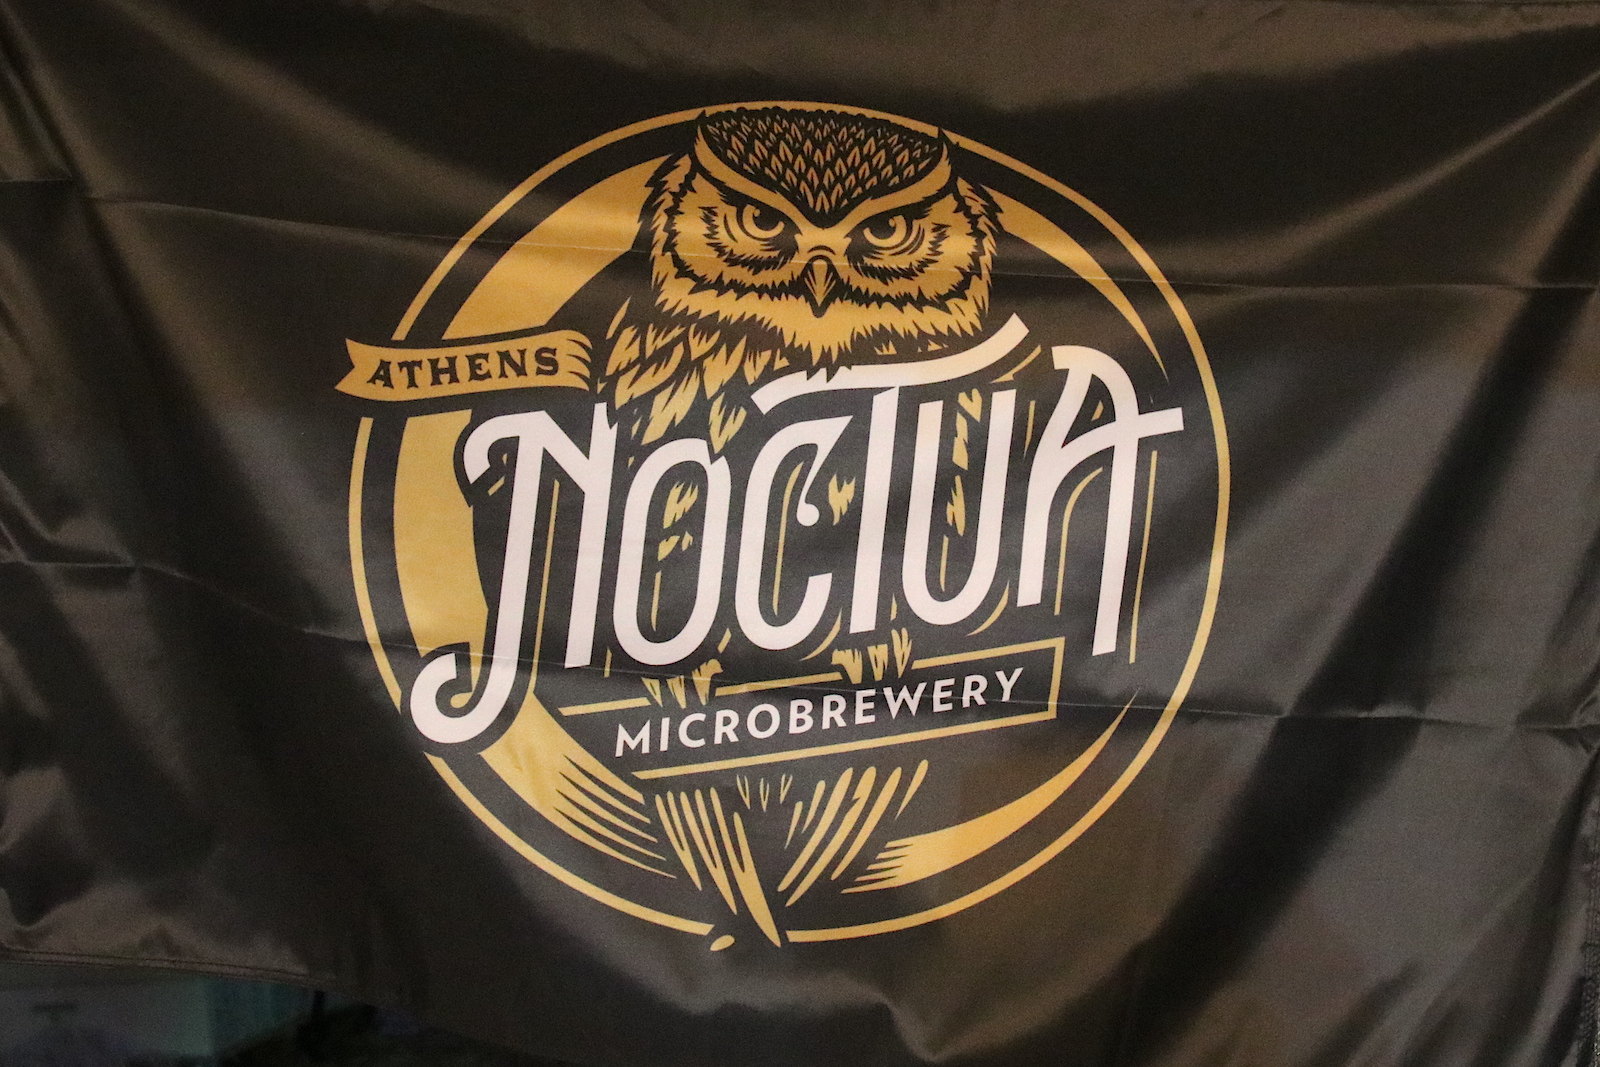 Noctua Brewery logo in flag at Peloponnese Ber Festival